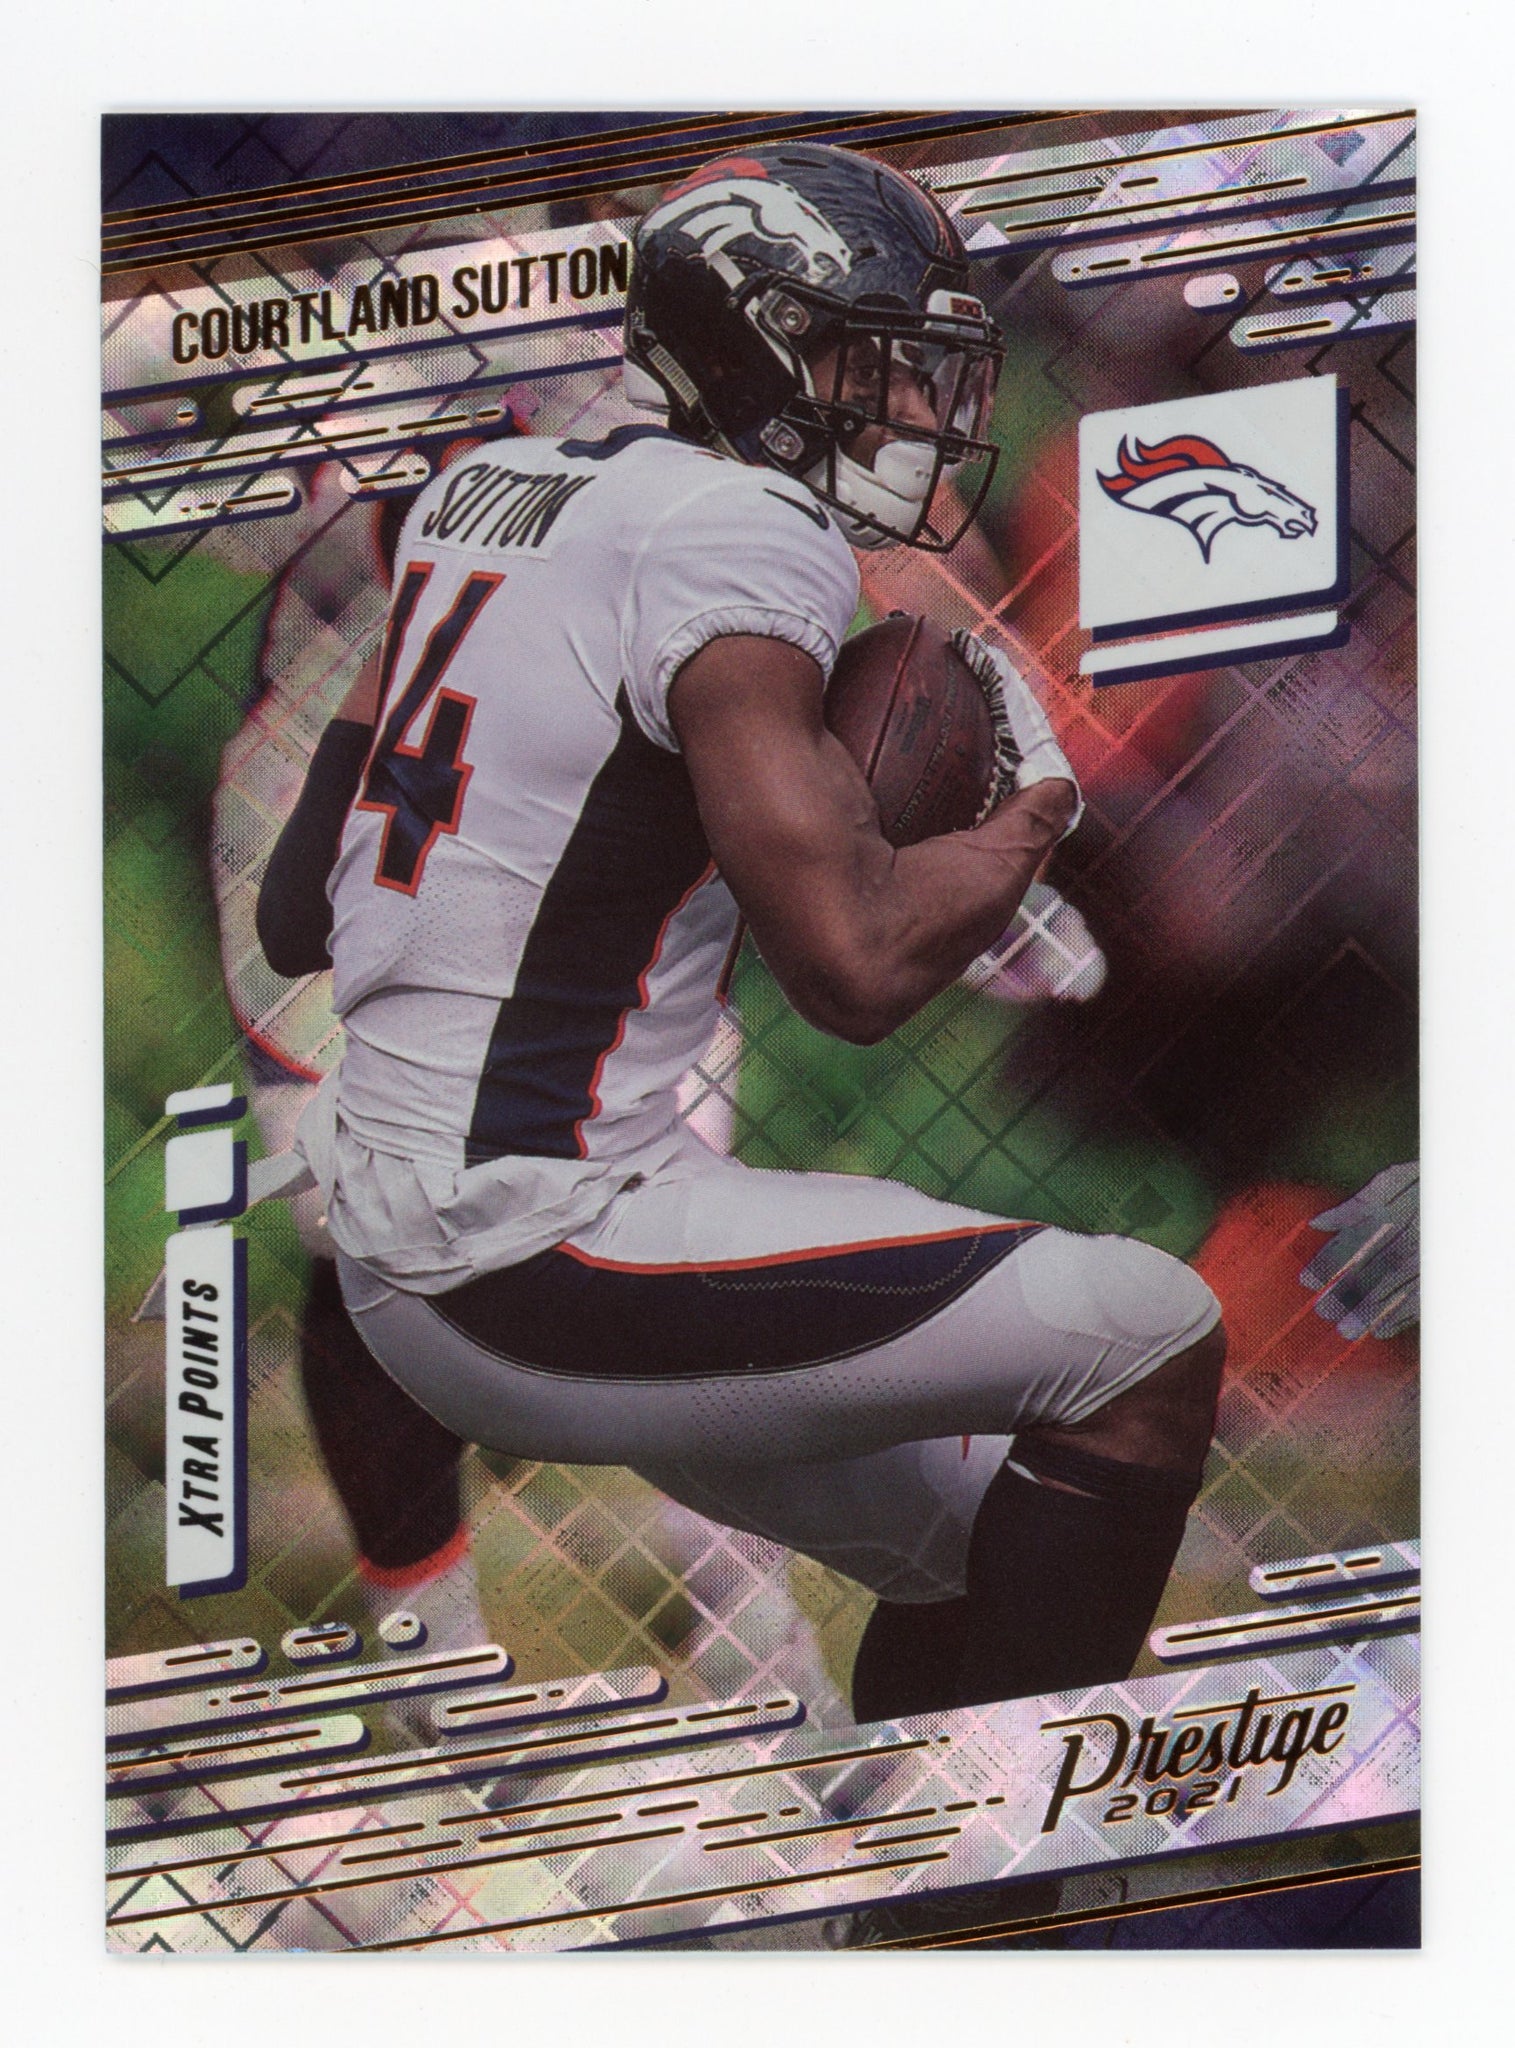 Courtland Sutton Panini 2020-2021 Prestige Diamond Denver Broncos #38